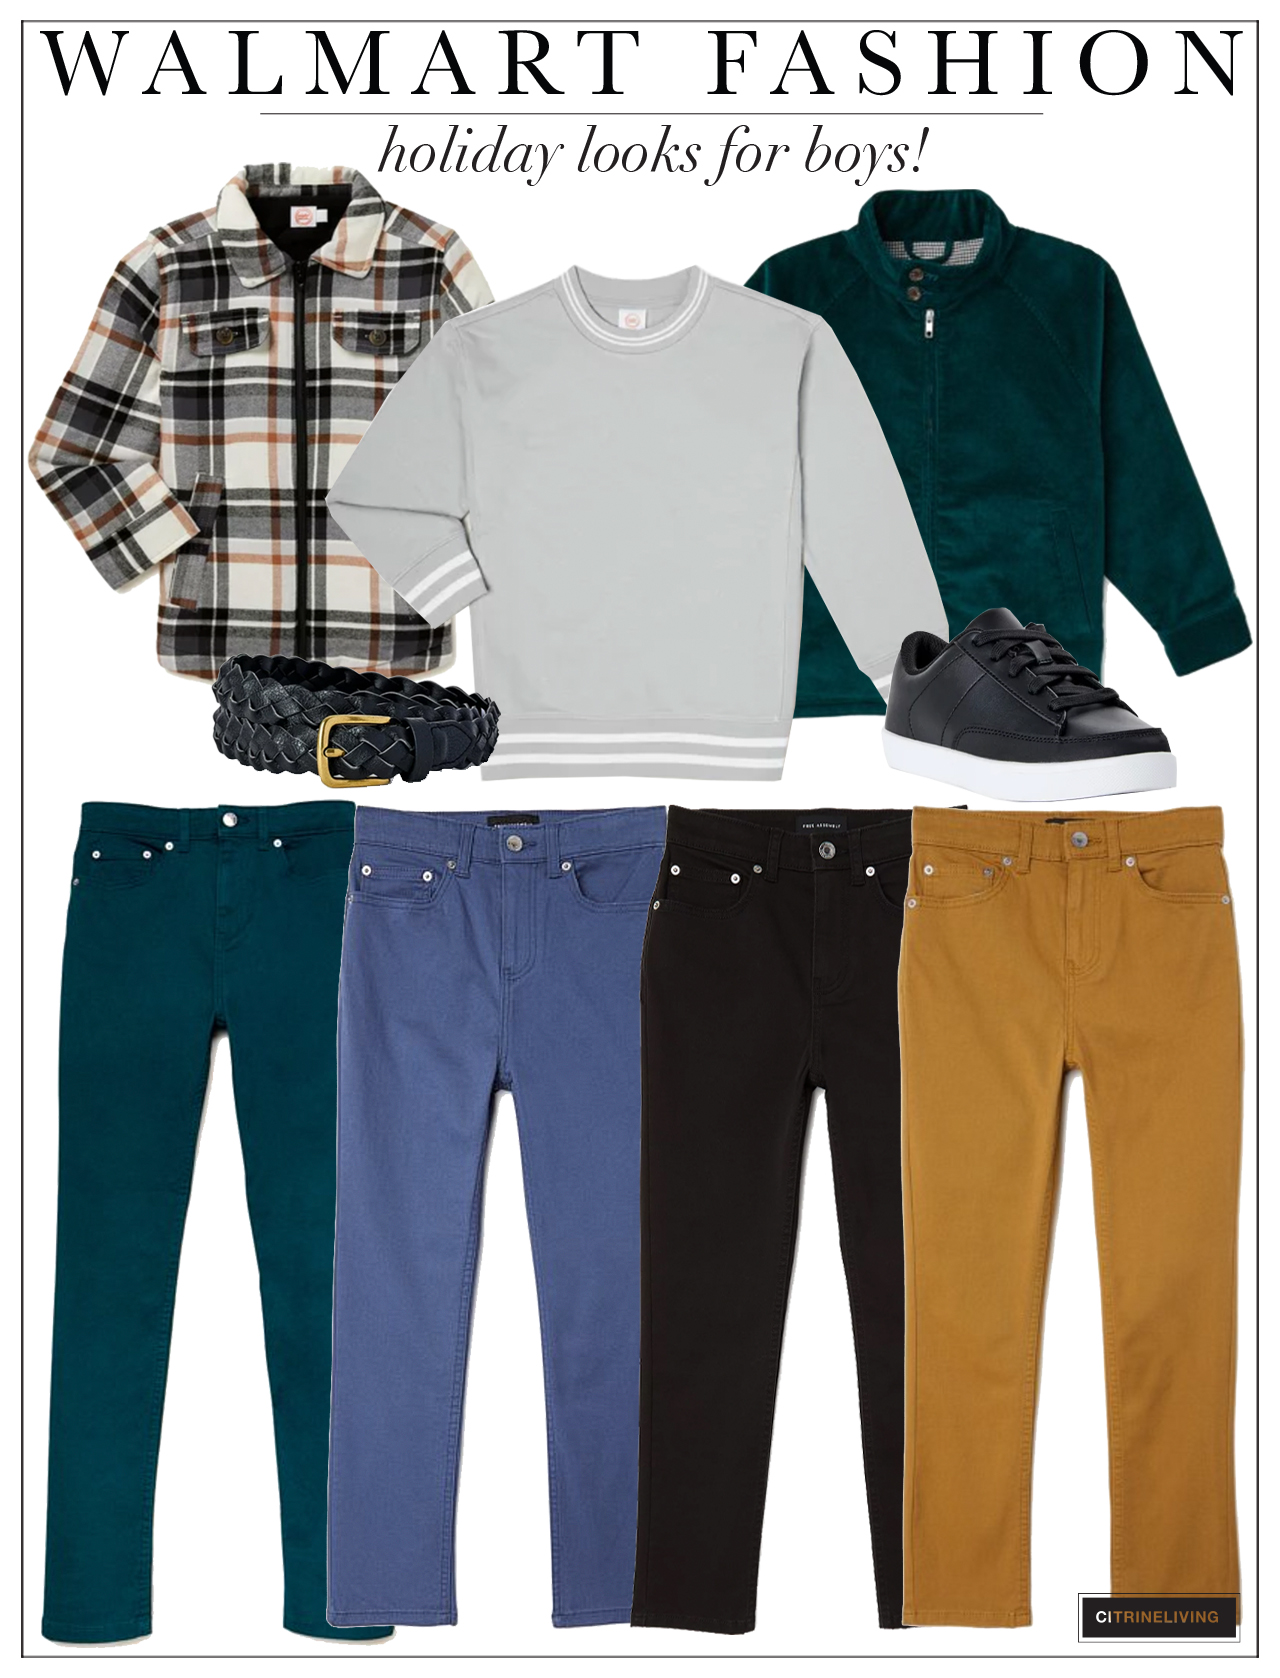 Boys fashion looks from Walmart - plaid shirt jacket, colored denim, grey sweatshirt, green jacket, black sneakers and braided belt.